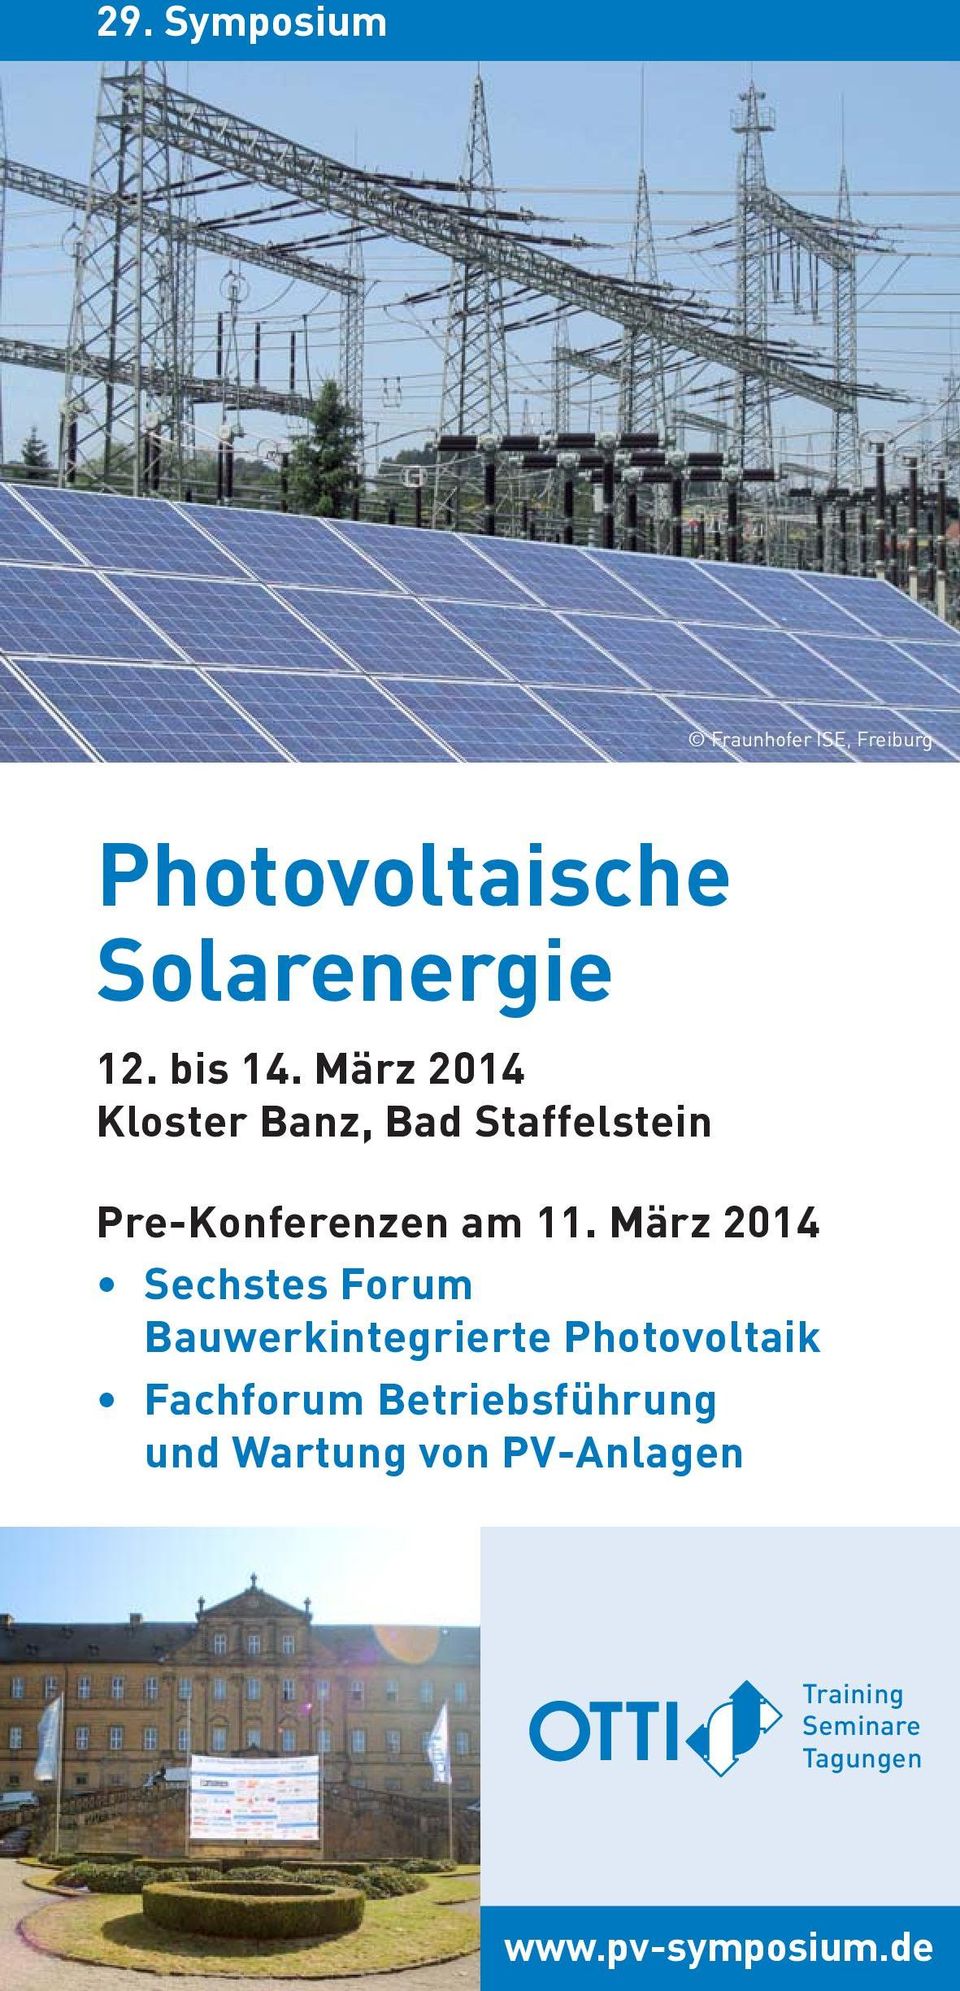 März 2014 Sechstes Forum Bauwerkintegrierte Photovoltaik Fachforum